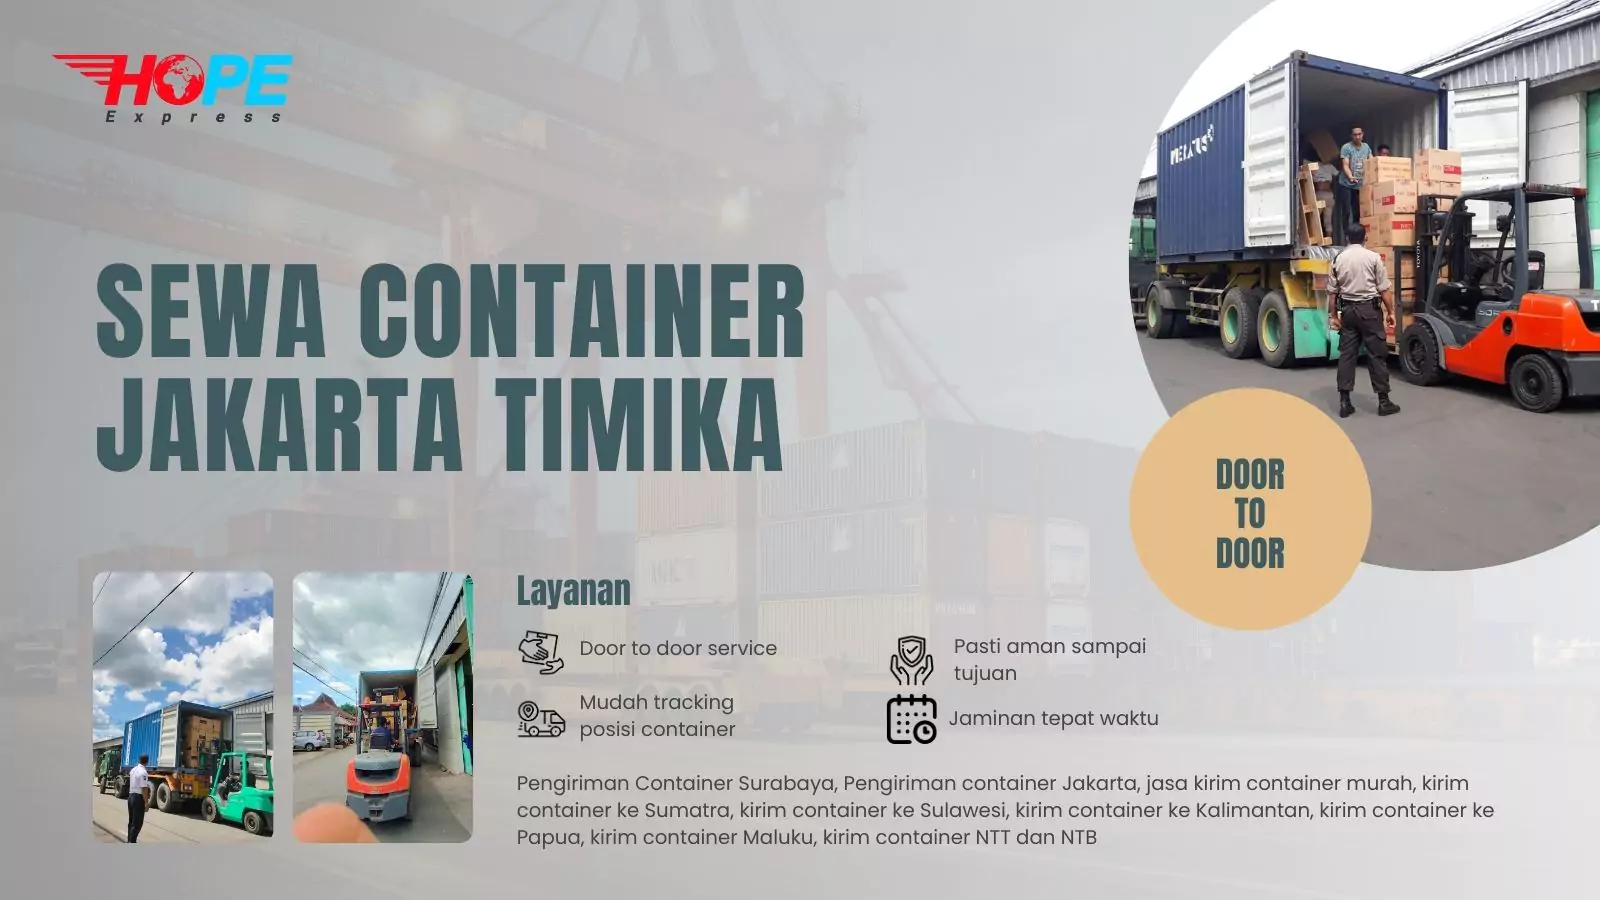 Sewa Container Jakarta Timika